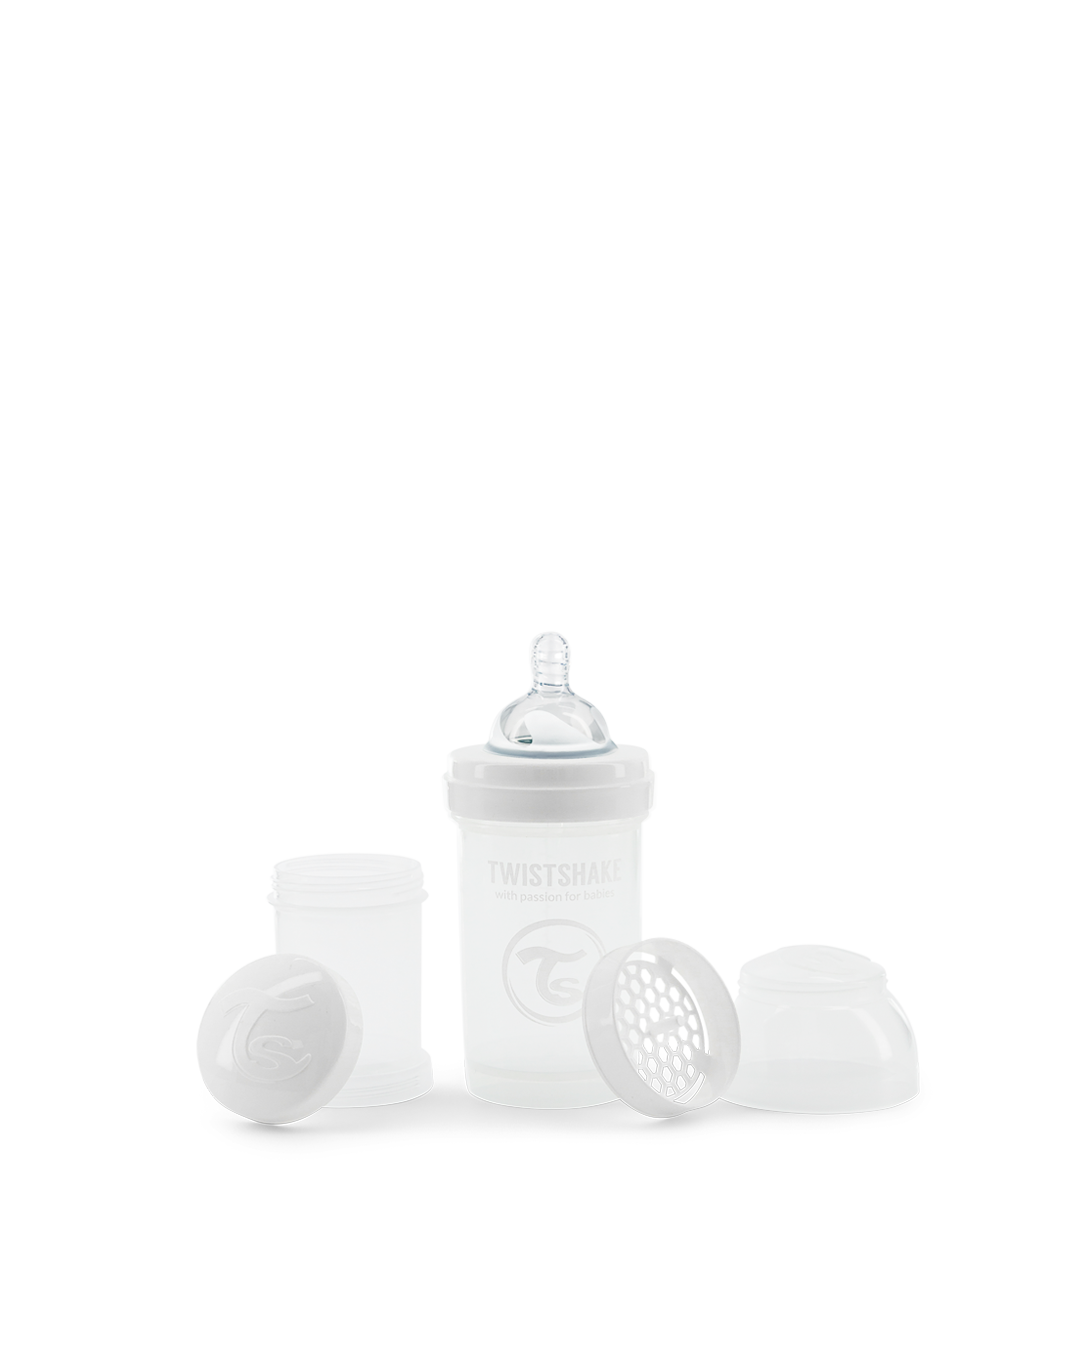  Twistshake Anti Colic Baby Bottles - Premium 330ml